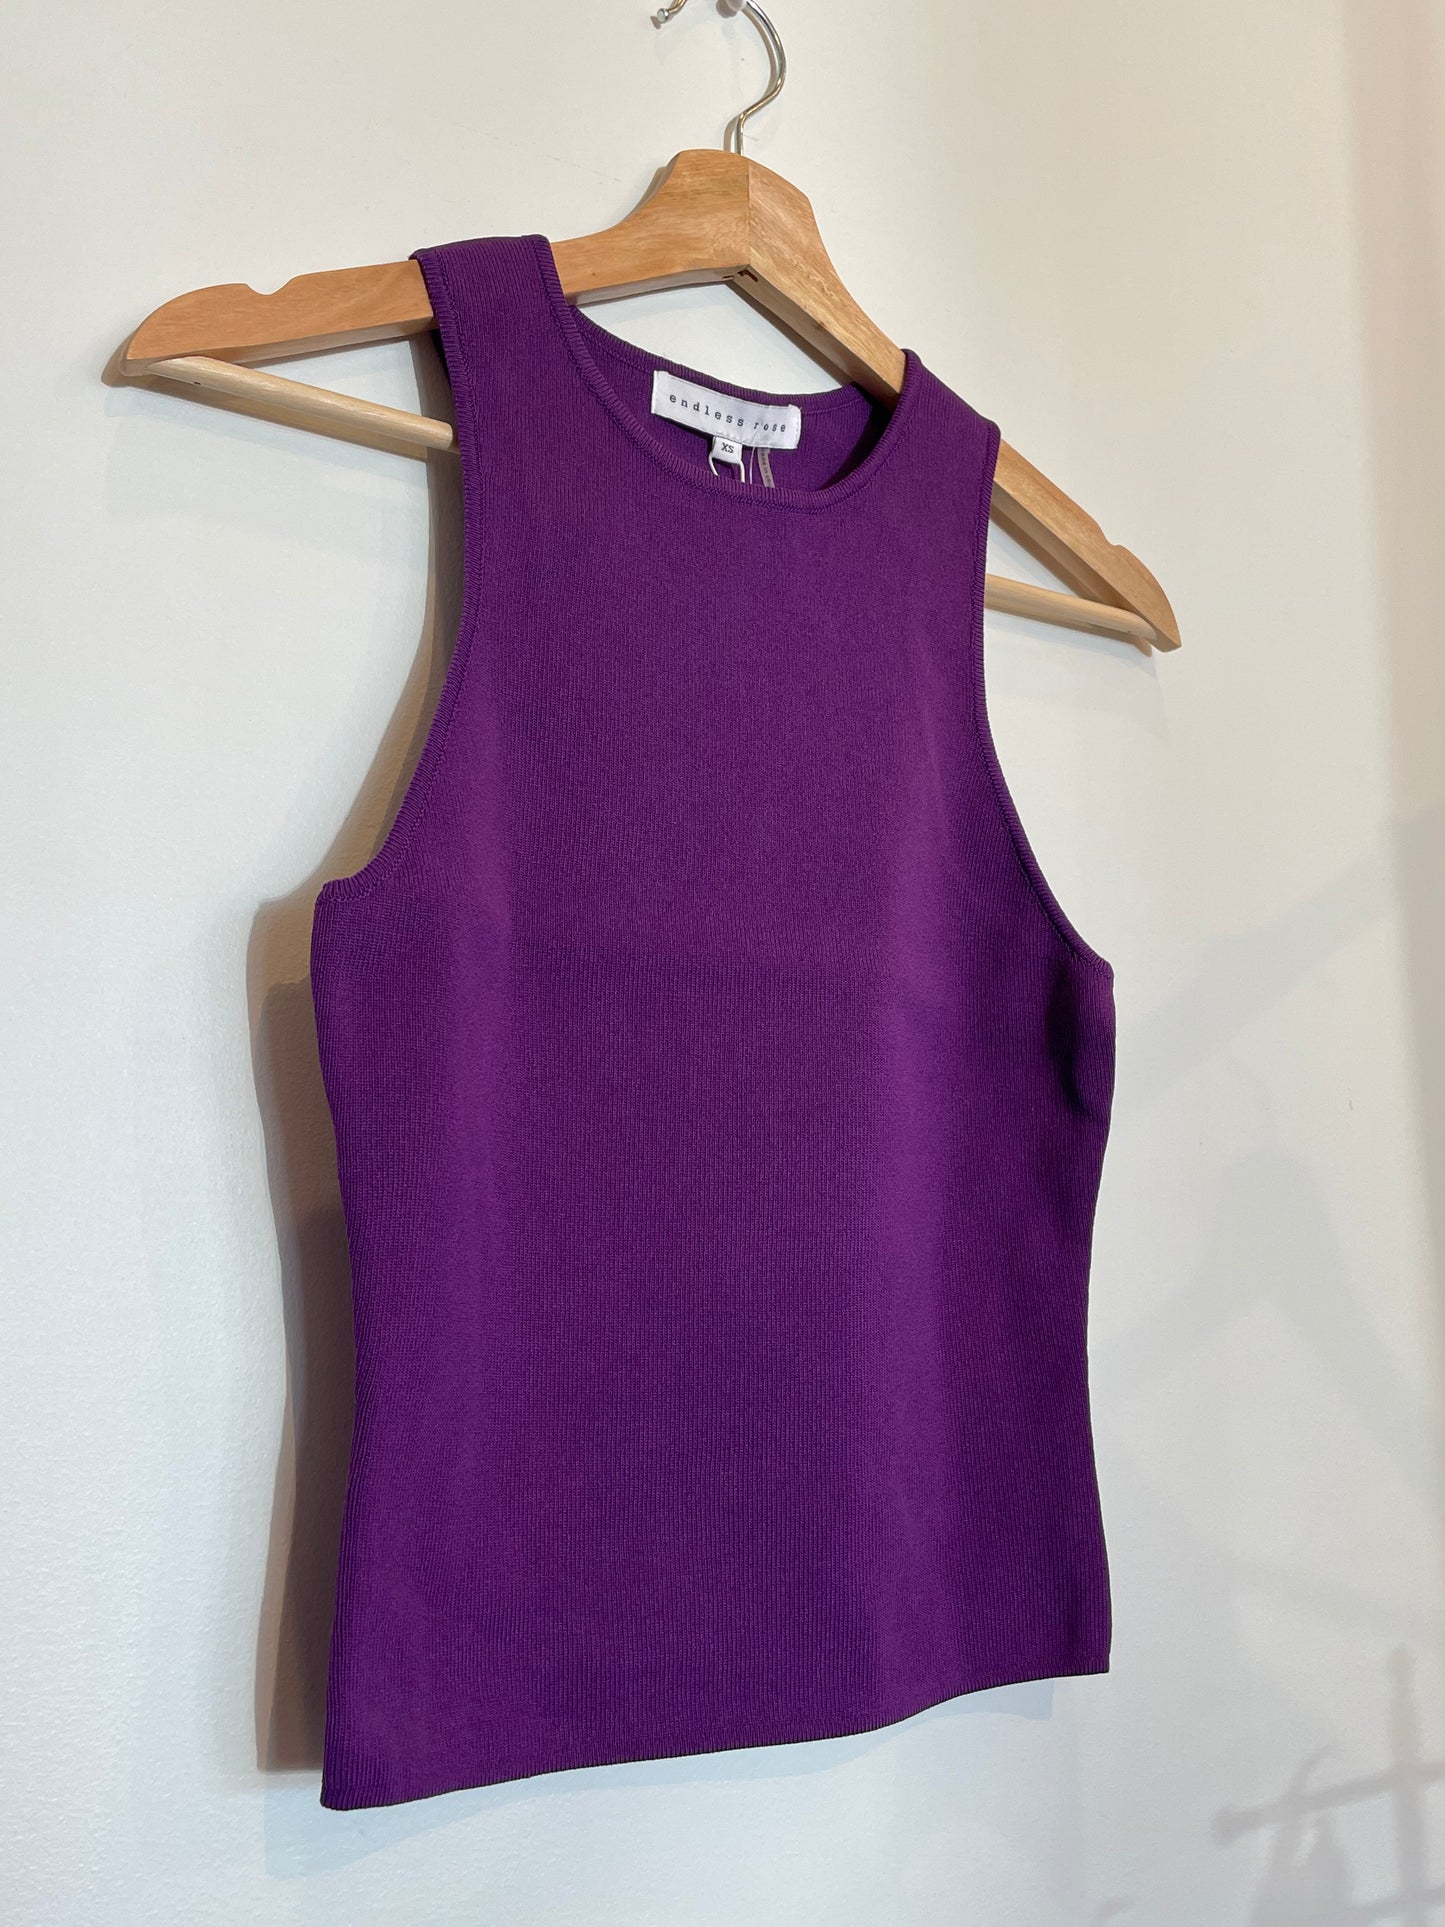 Purple sleeveless top